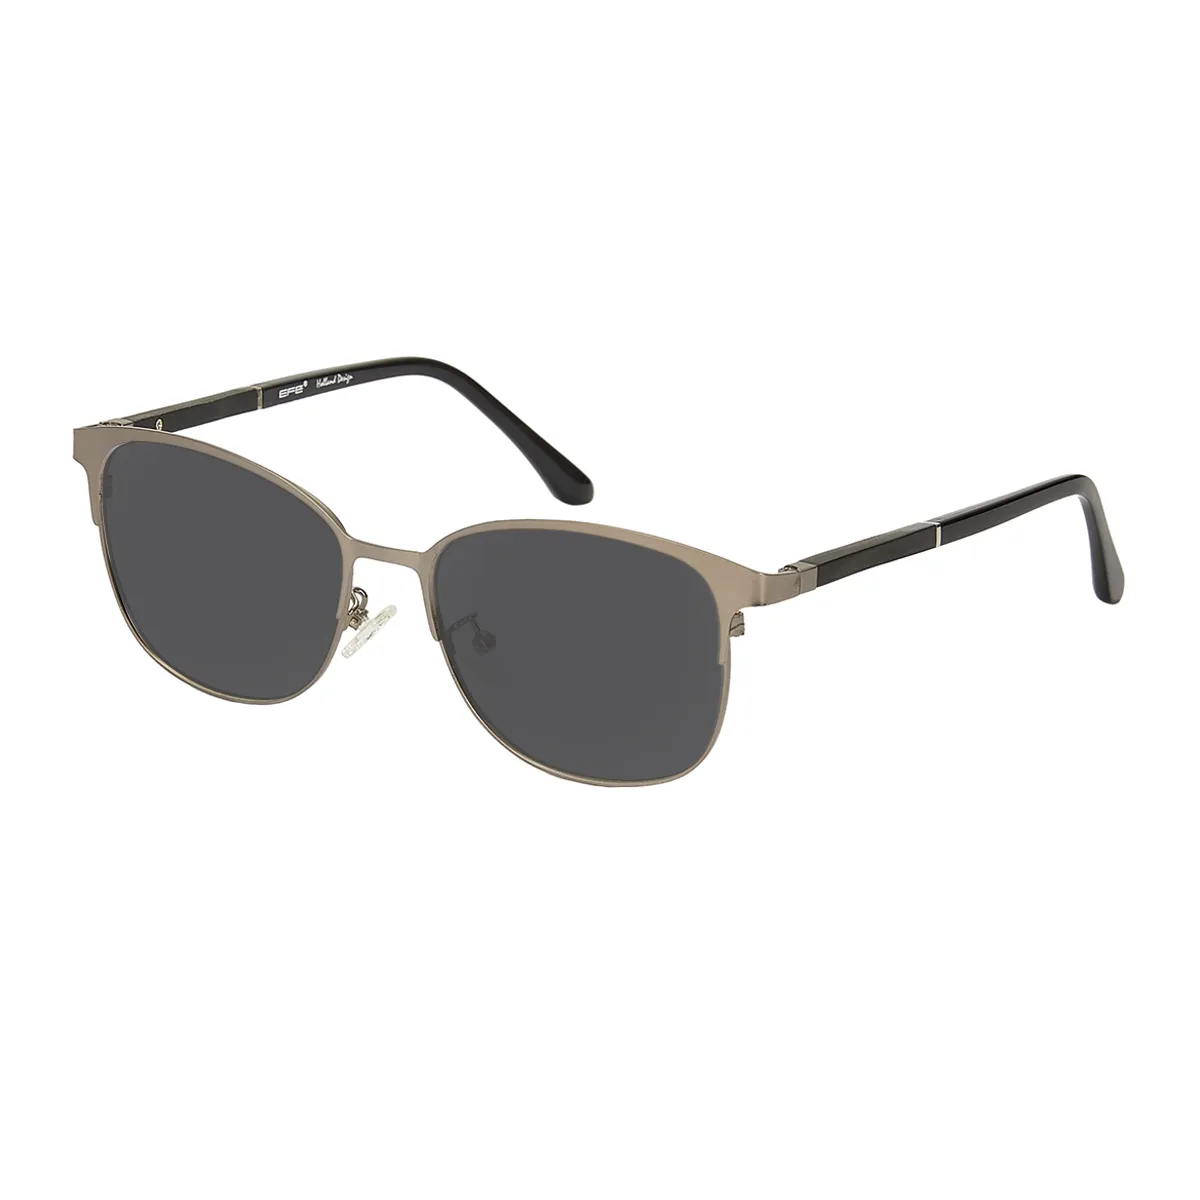 Craig - Browline Gunmetal Sunglasses for Men